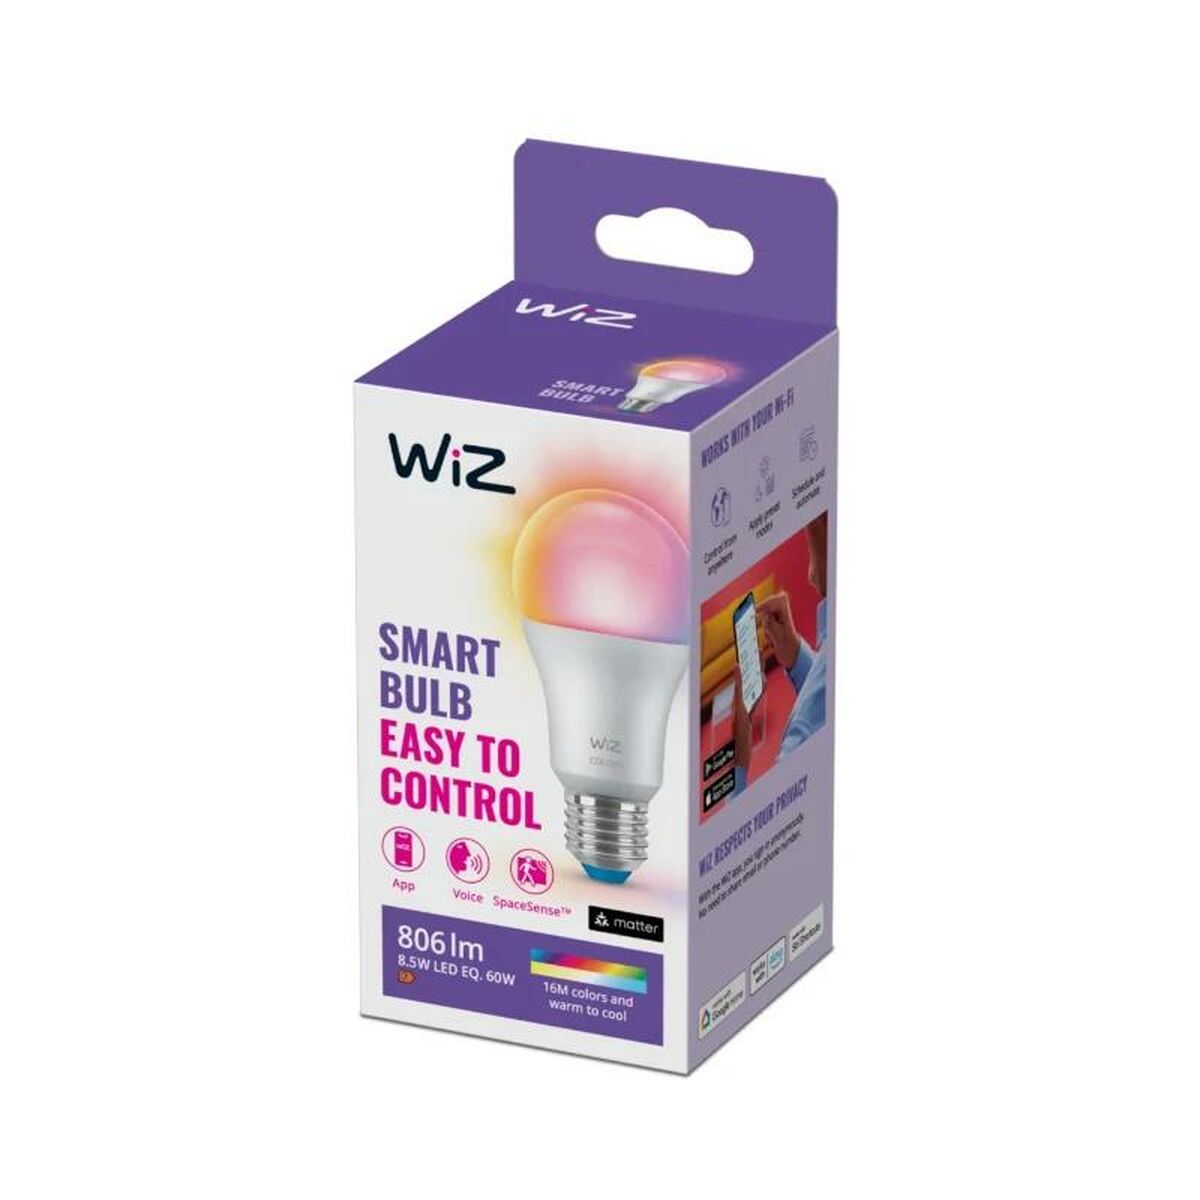 Smart Light bulb Philips 929003601001 E27 LED 806 lm